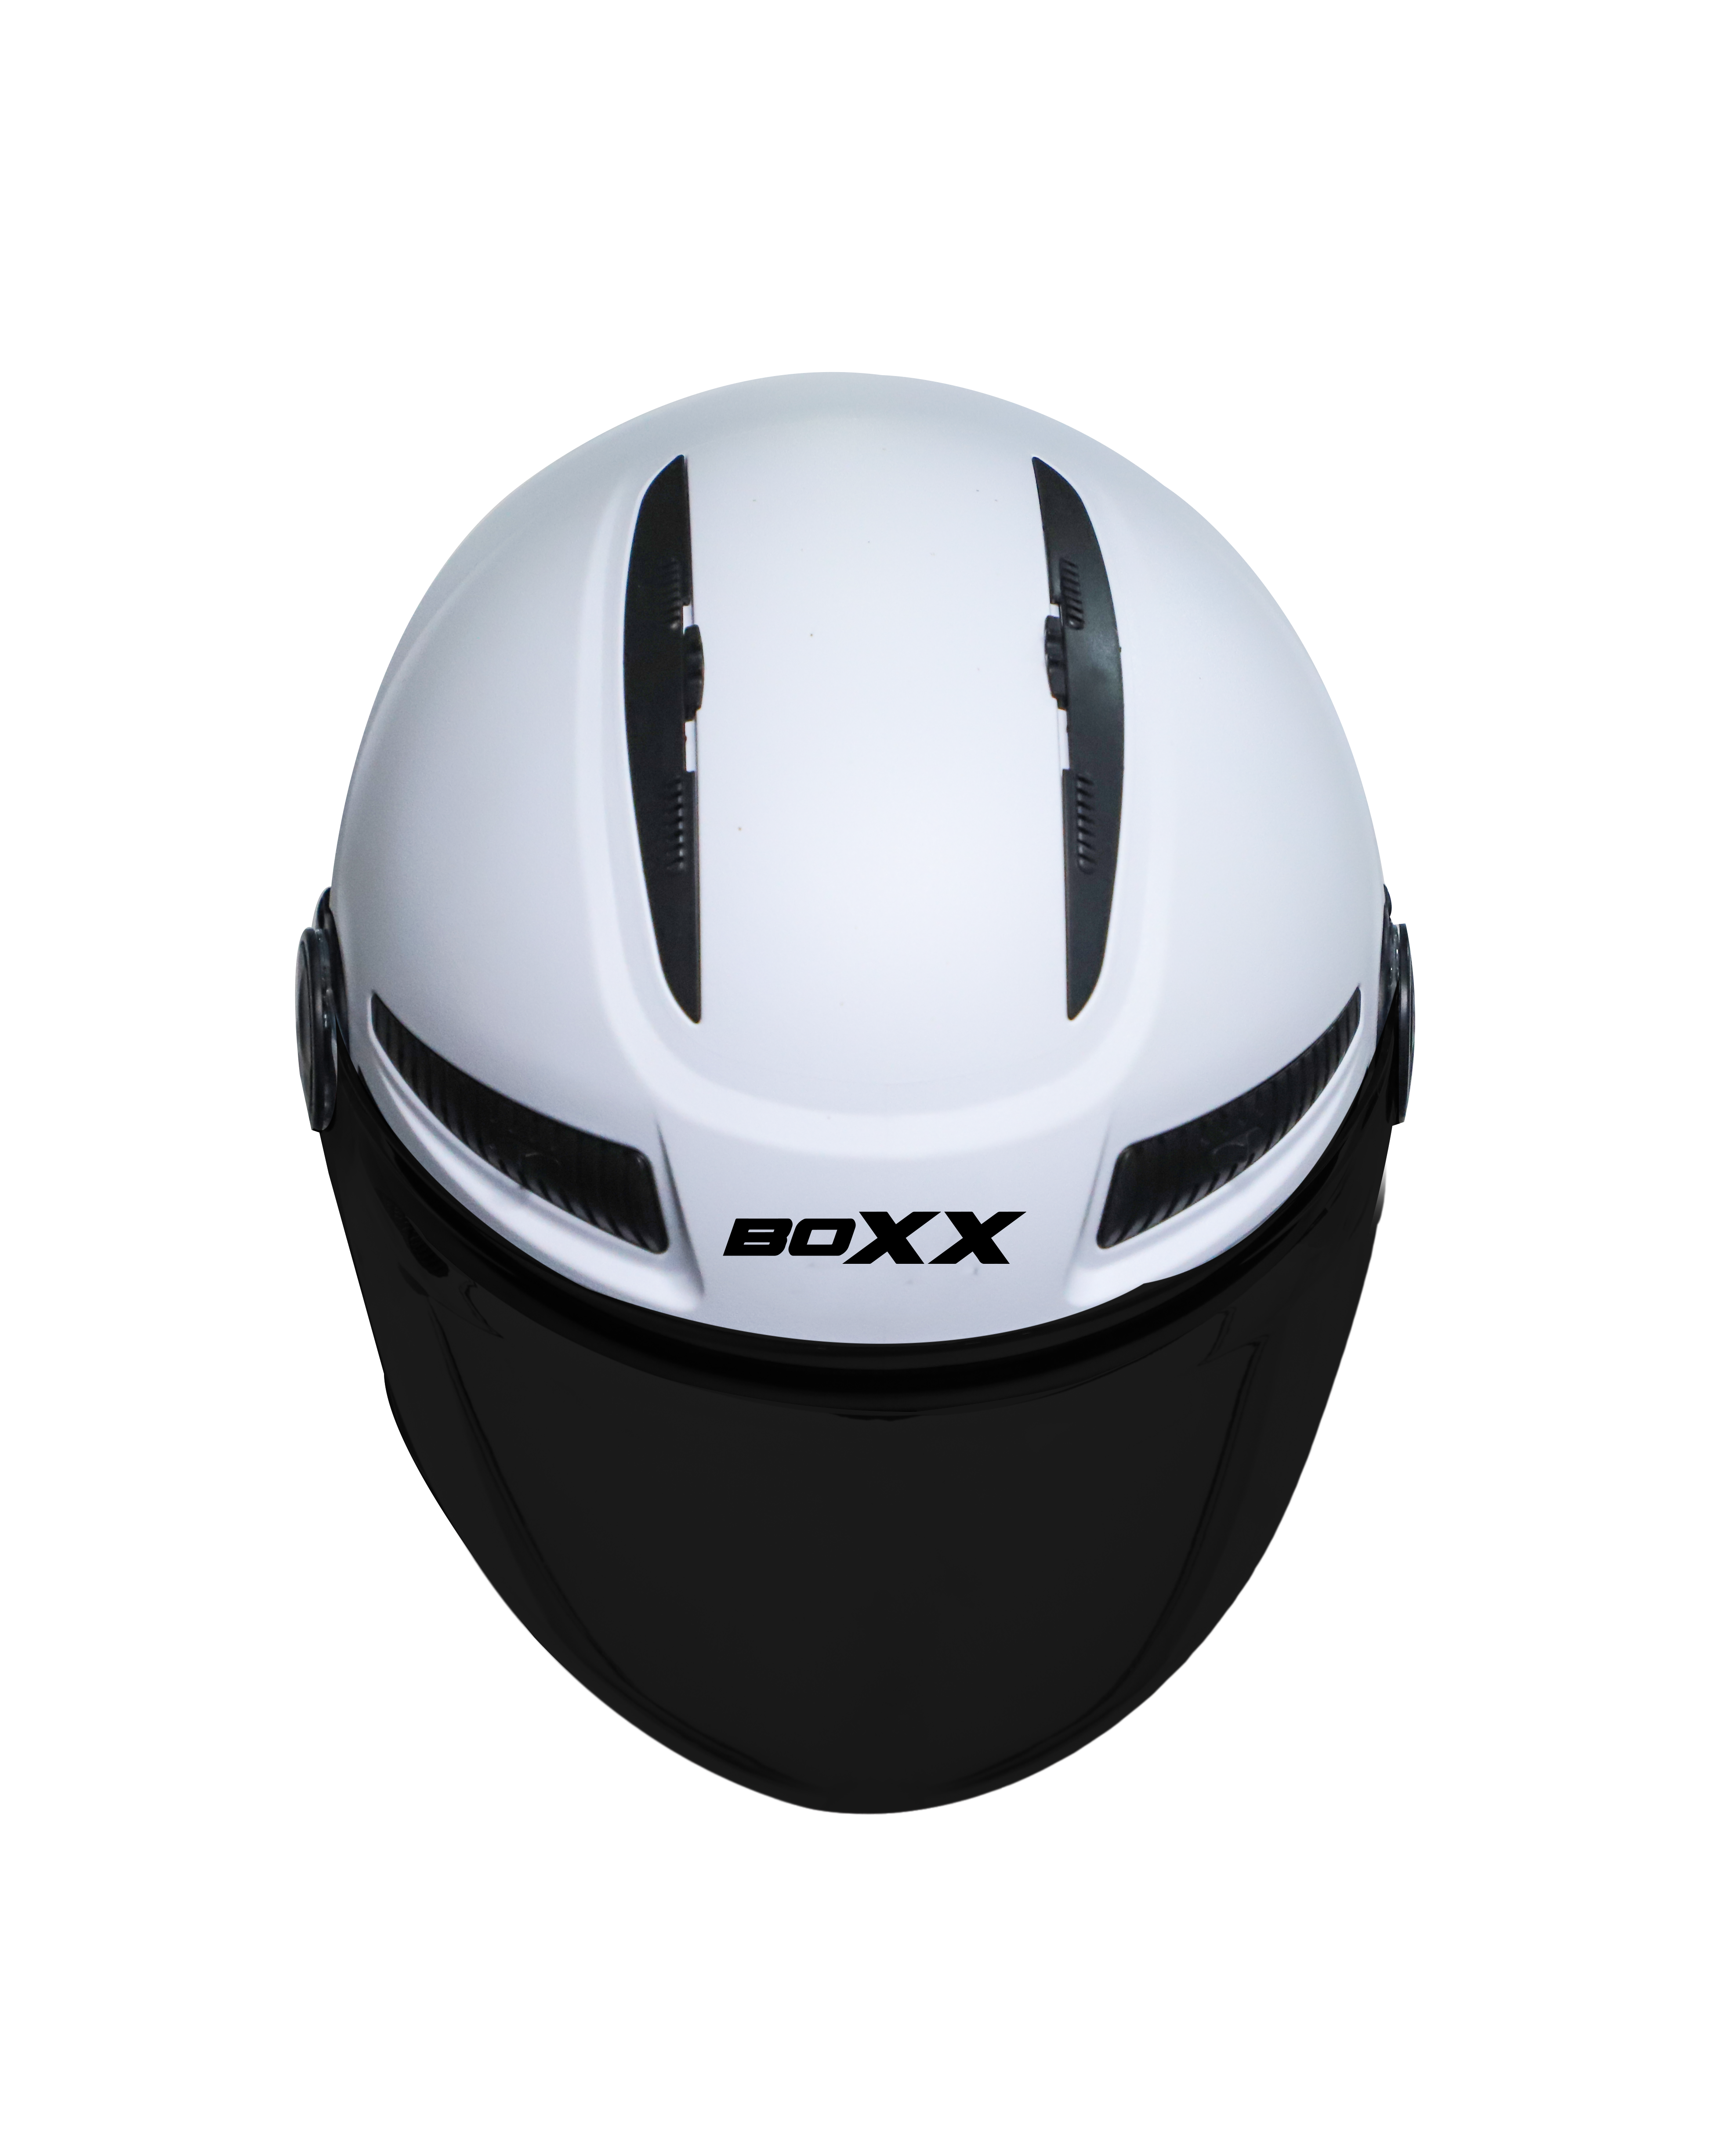 Steelbird SBH-24 Boxx Dashing ISI Certified Open Face Helmet For Men And Women (White With Smoke Visor)